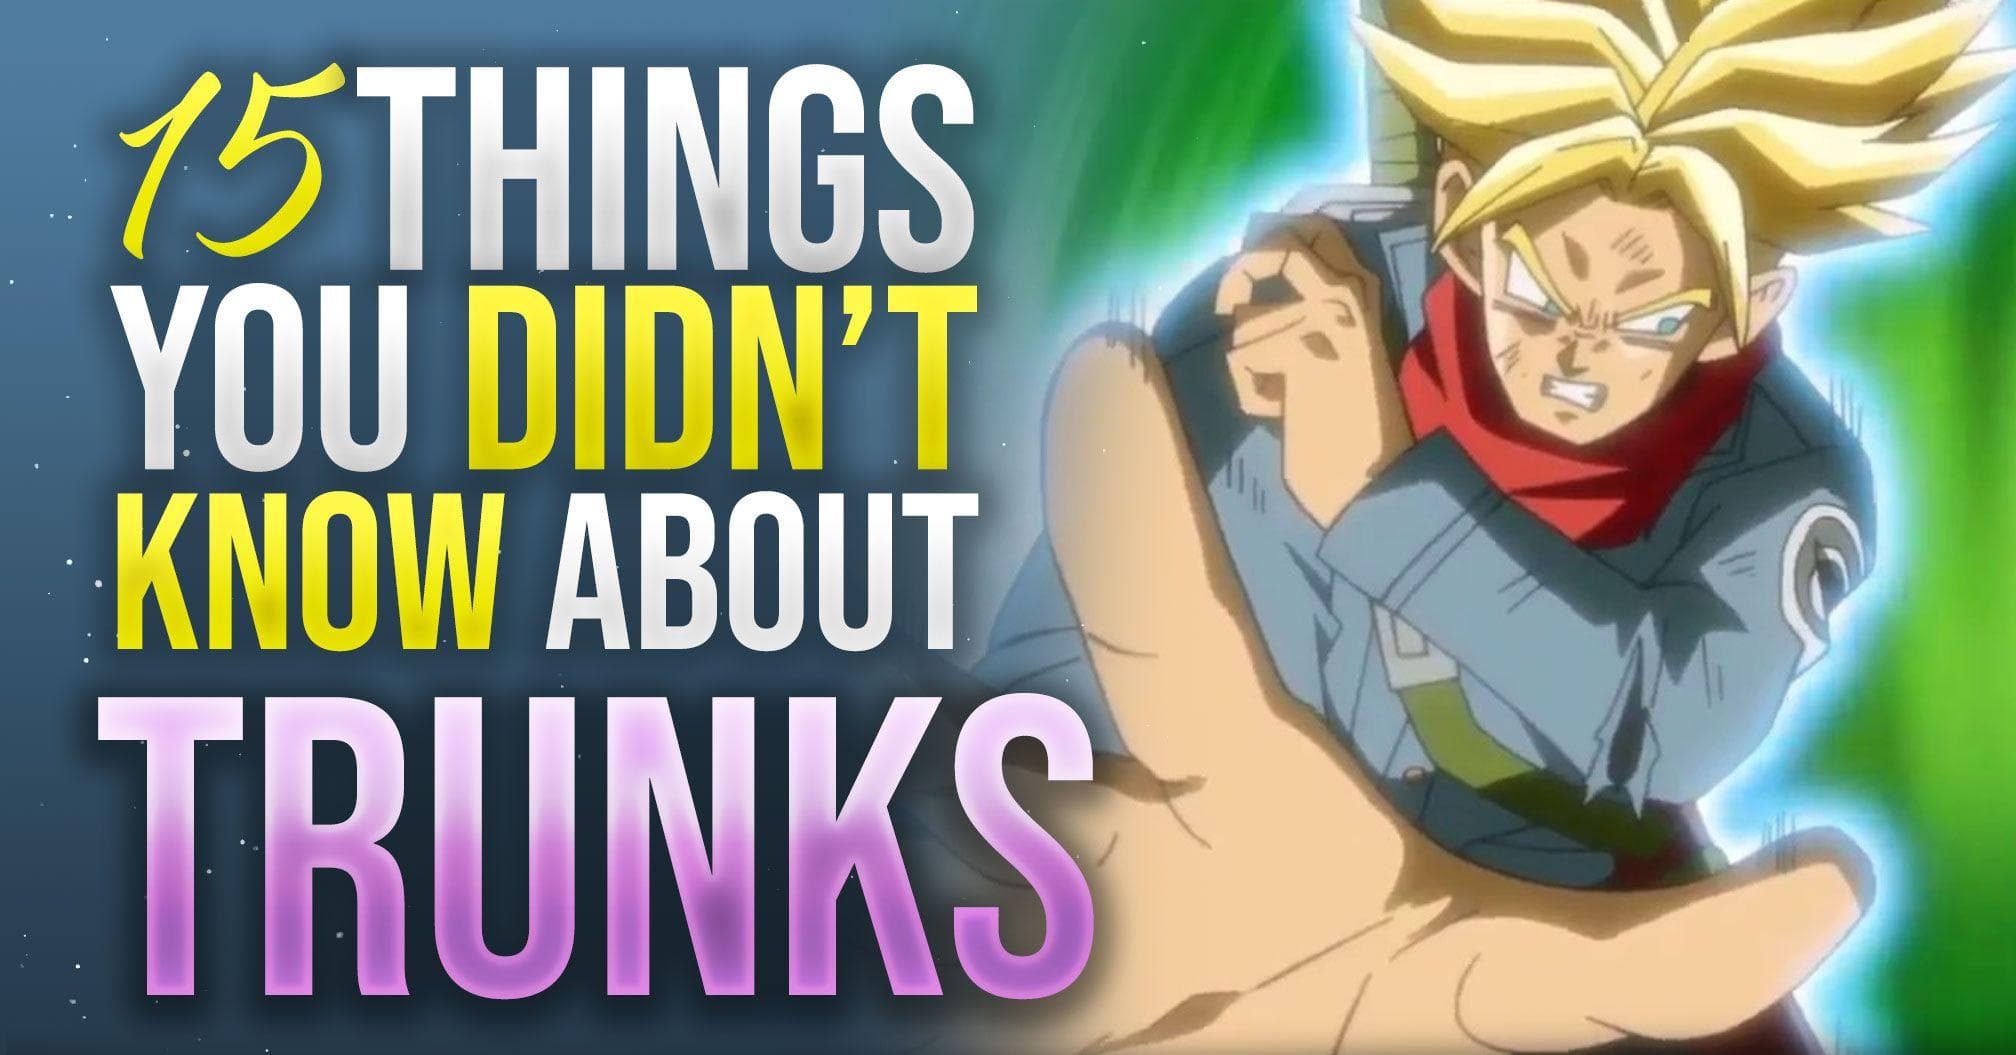 Dragon Ball: 10 Super Saiyan 3 Facts You Didn't Know 